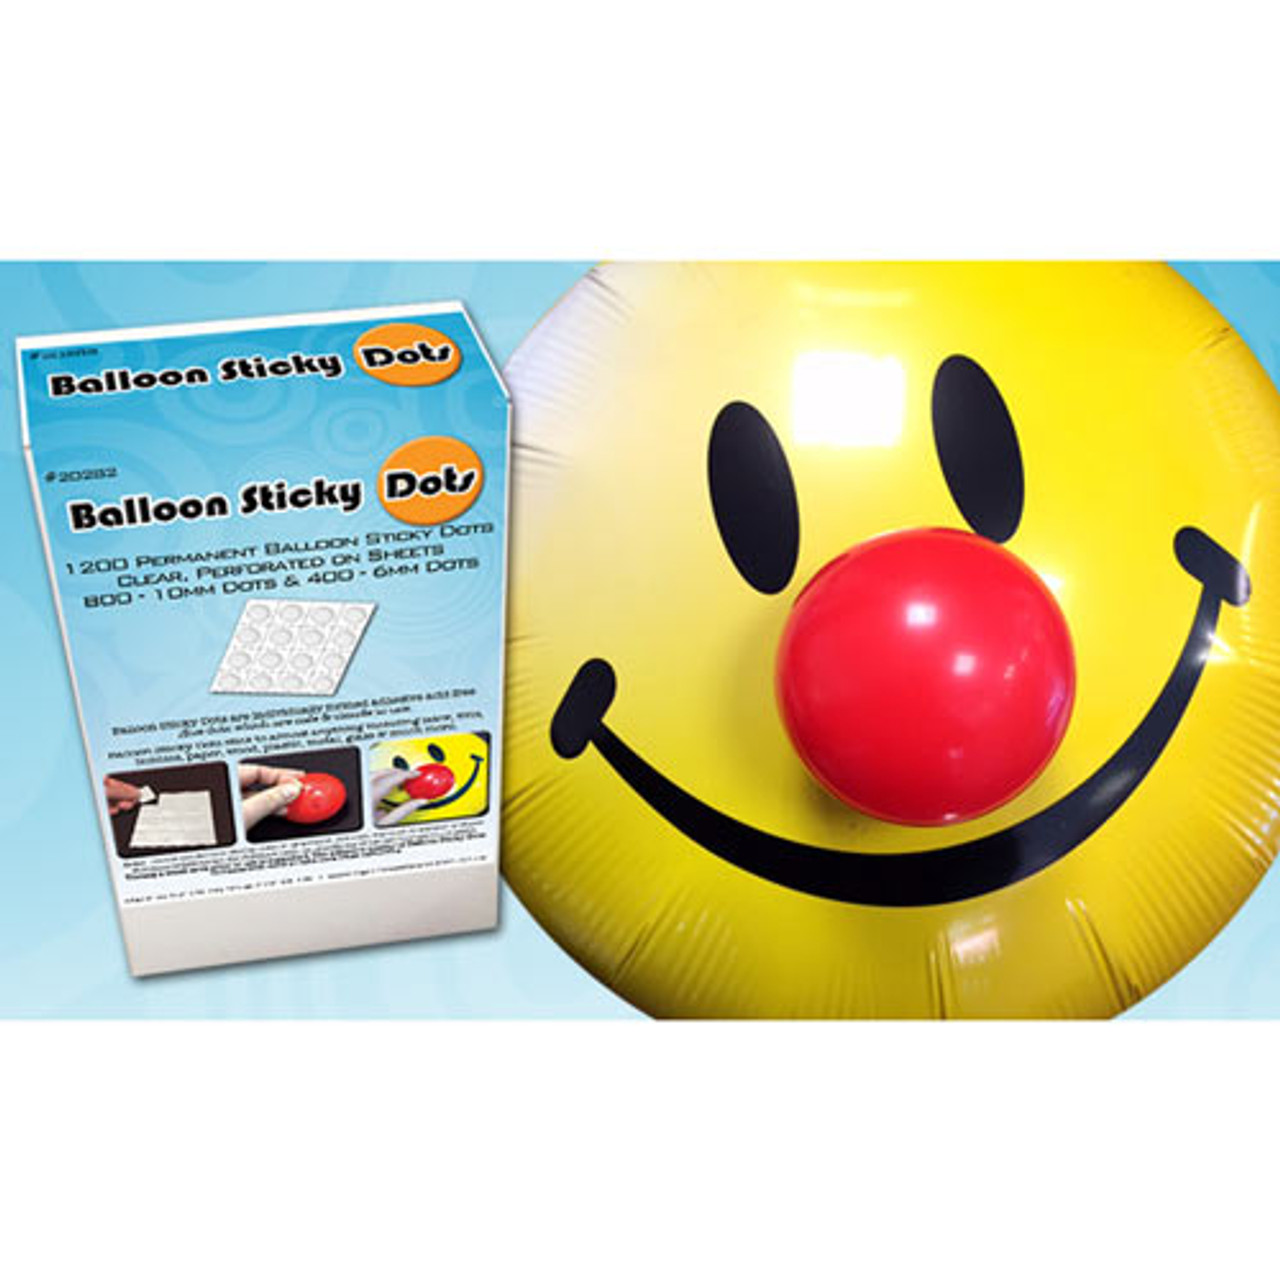 Balloon Sticky Glue Dots